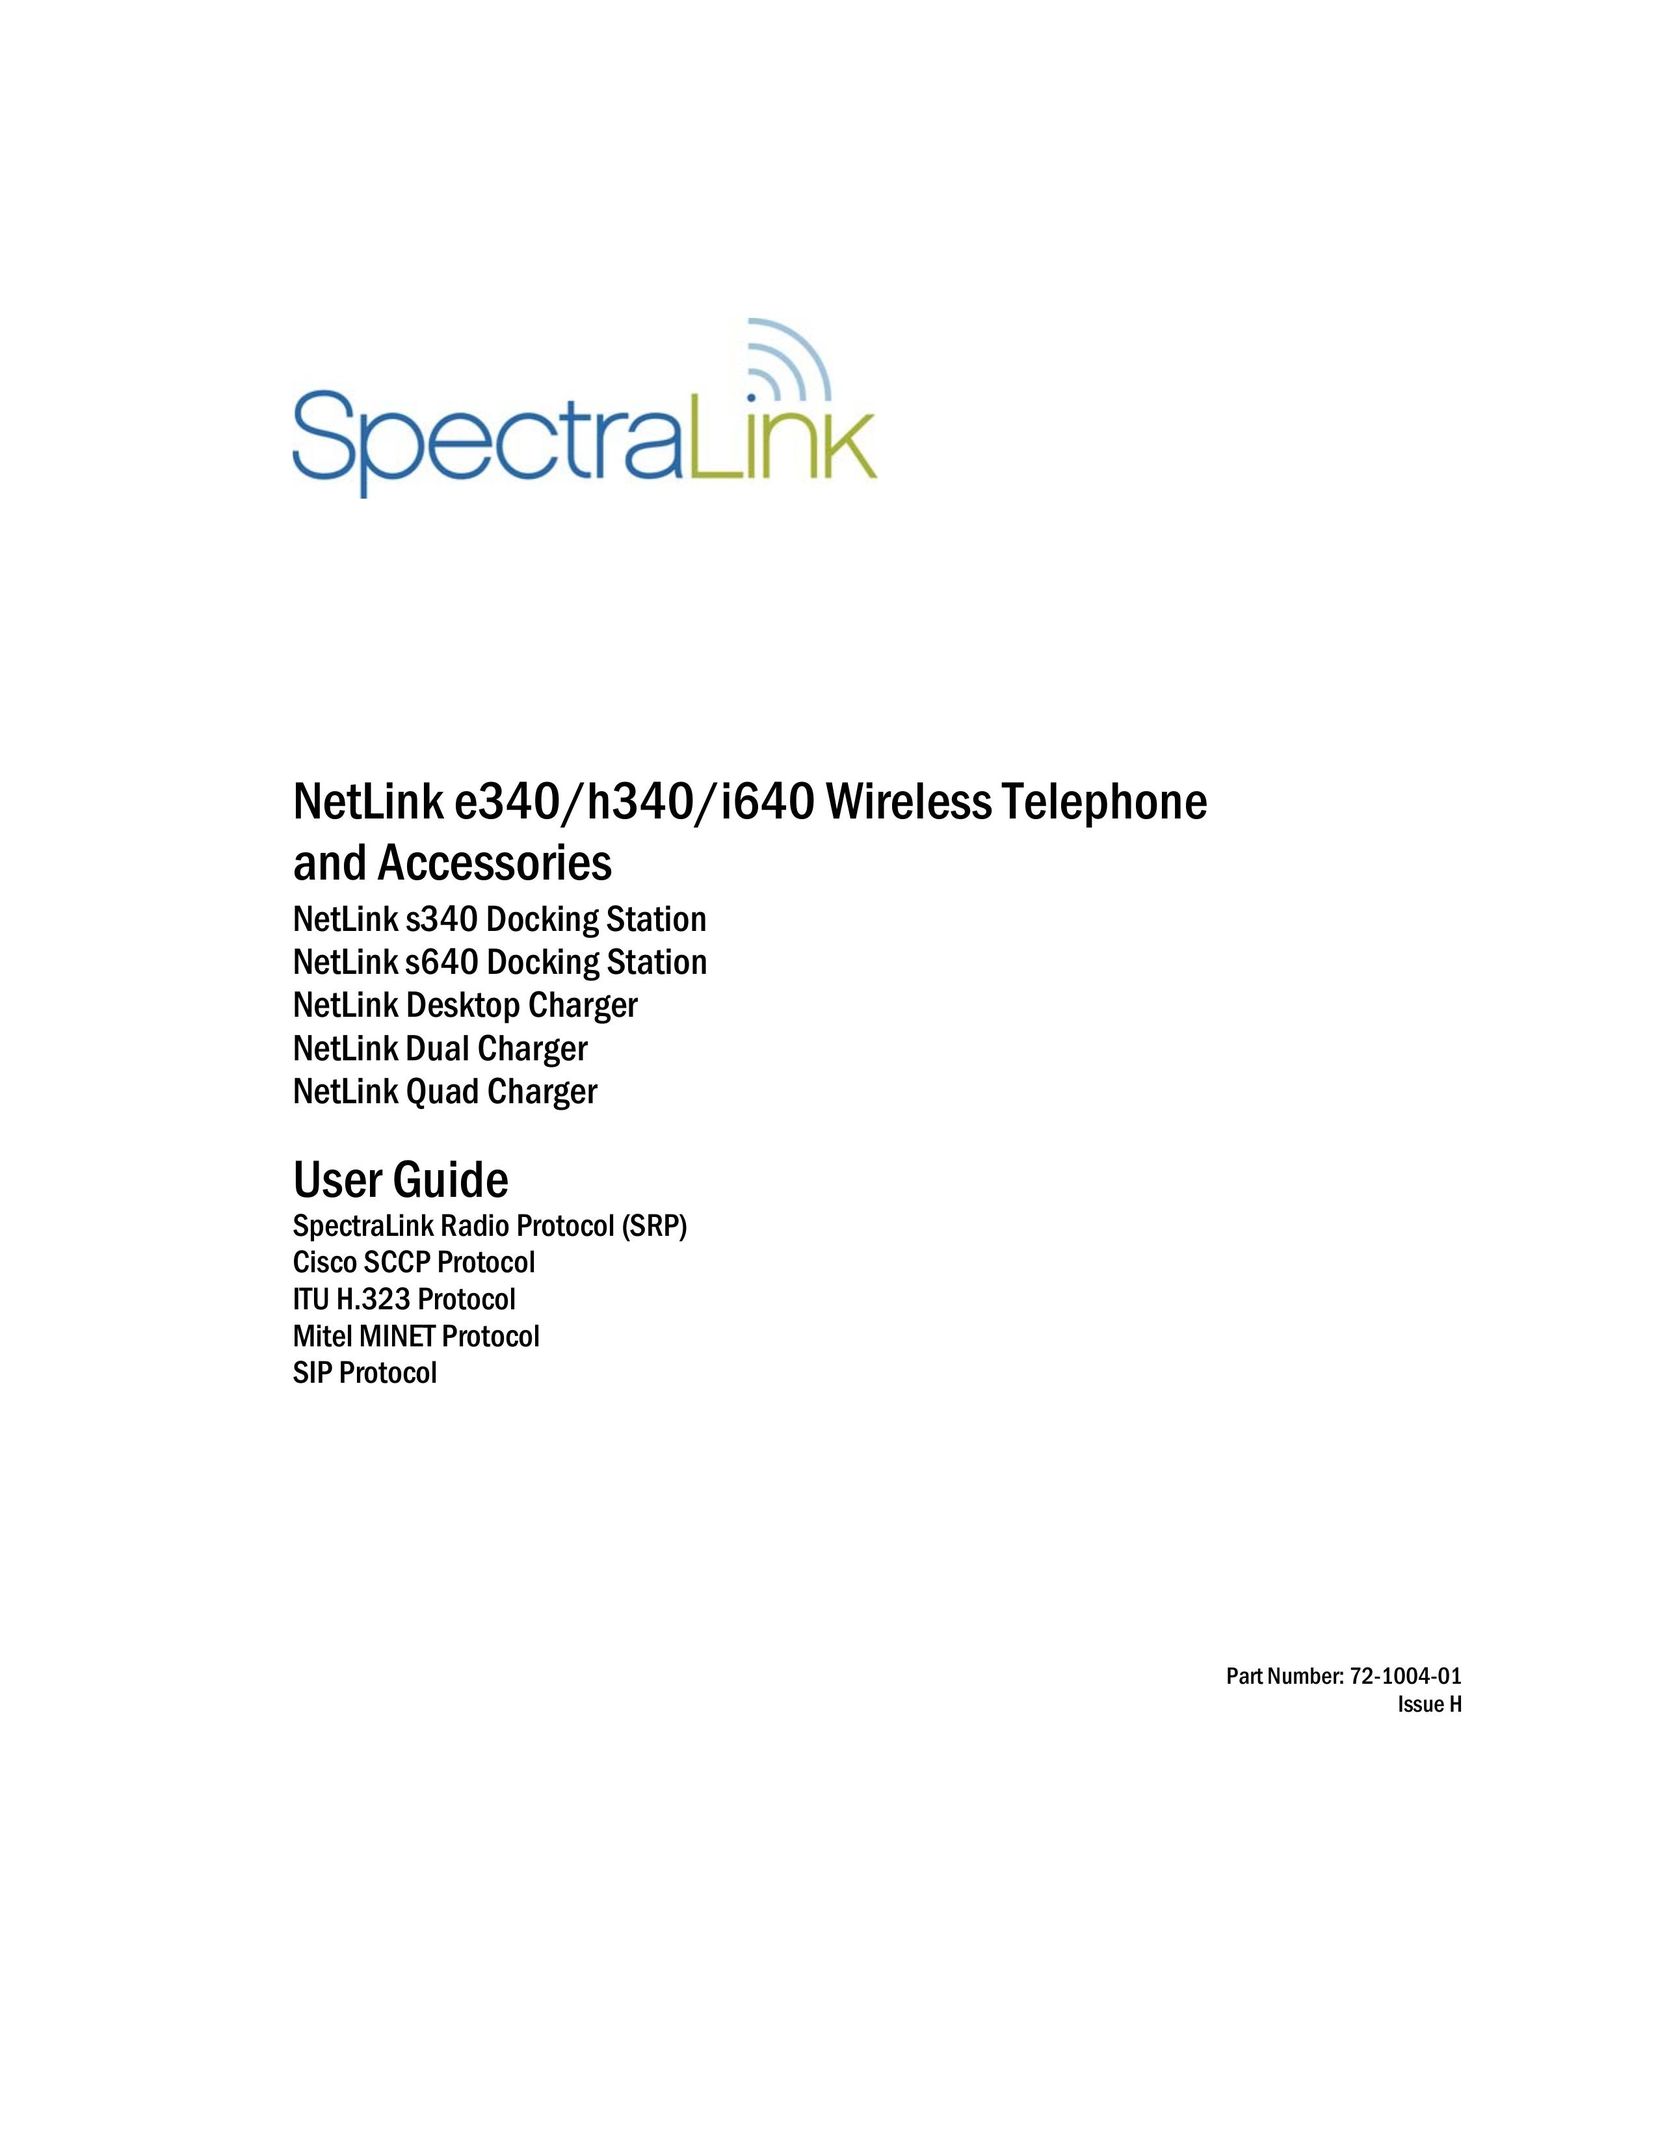 SpectraLink BPX100 Cell Phone User Manual